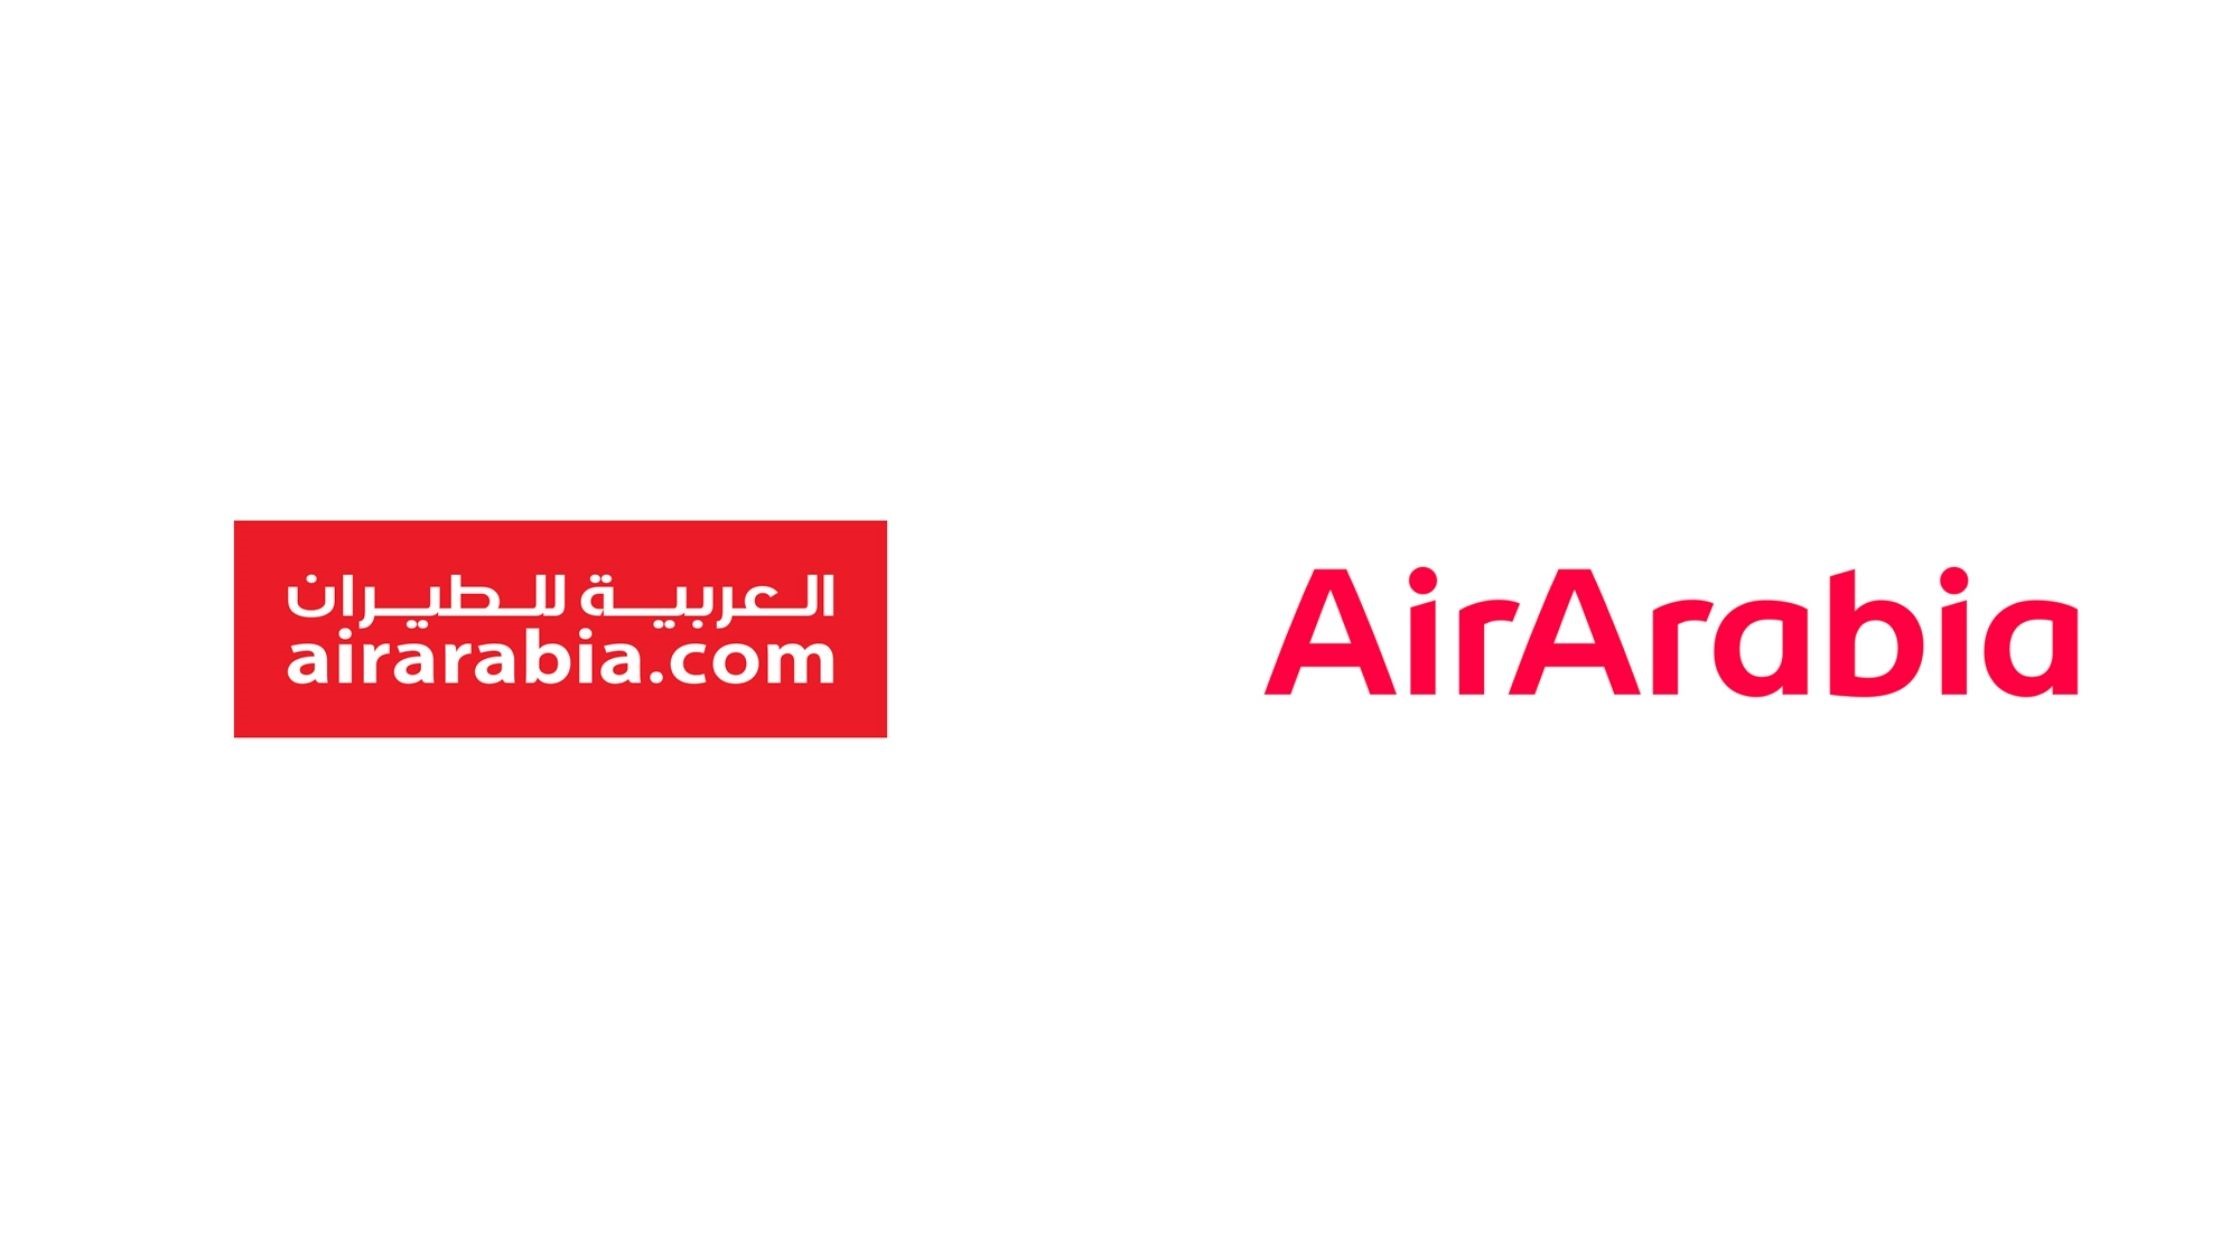 Айр арабиан. AIRARABIA лого. Air Arabia logo. Авиакомпания Air Arabia. AIRARABIA.com logo.